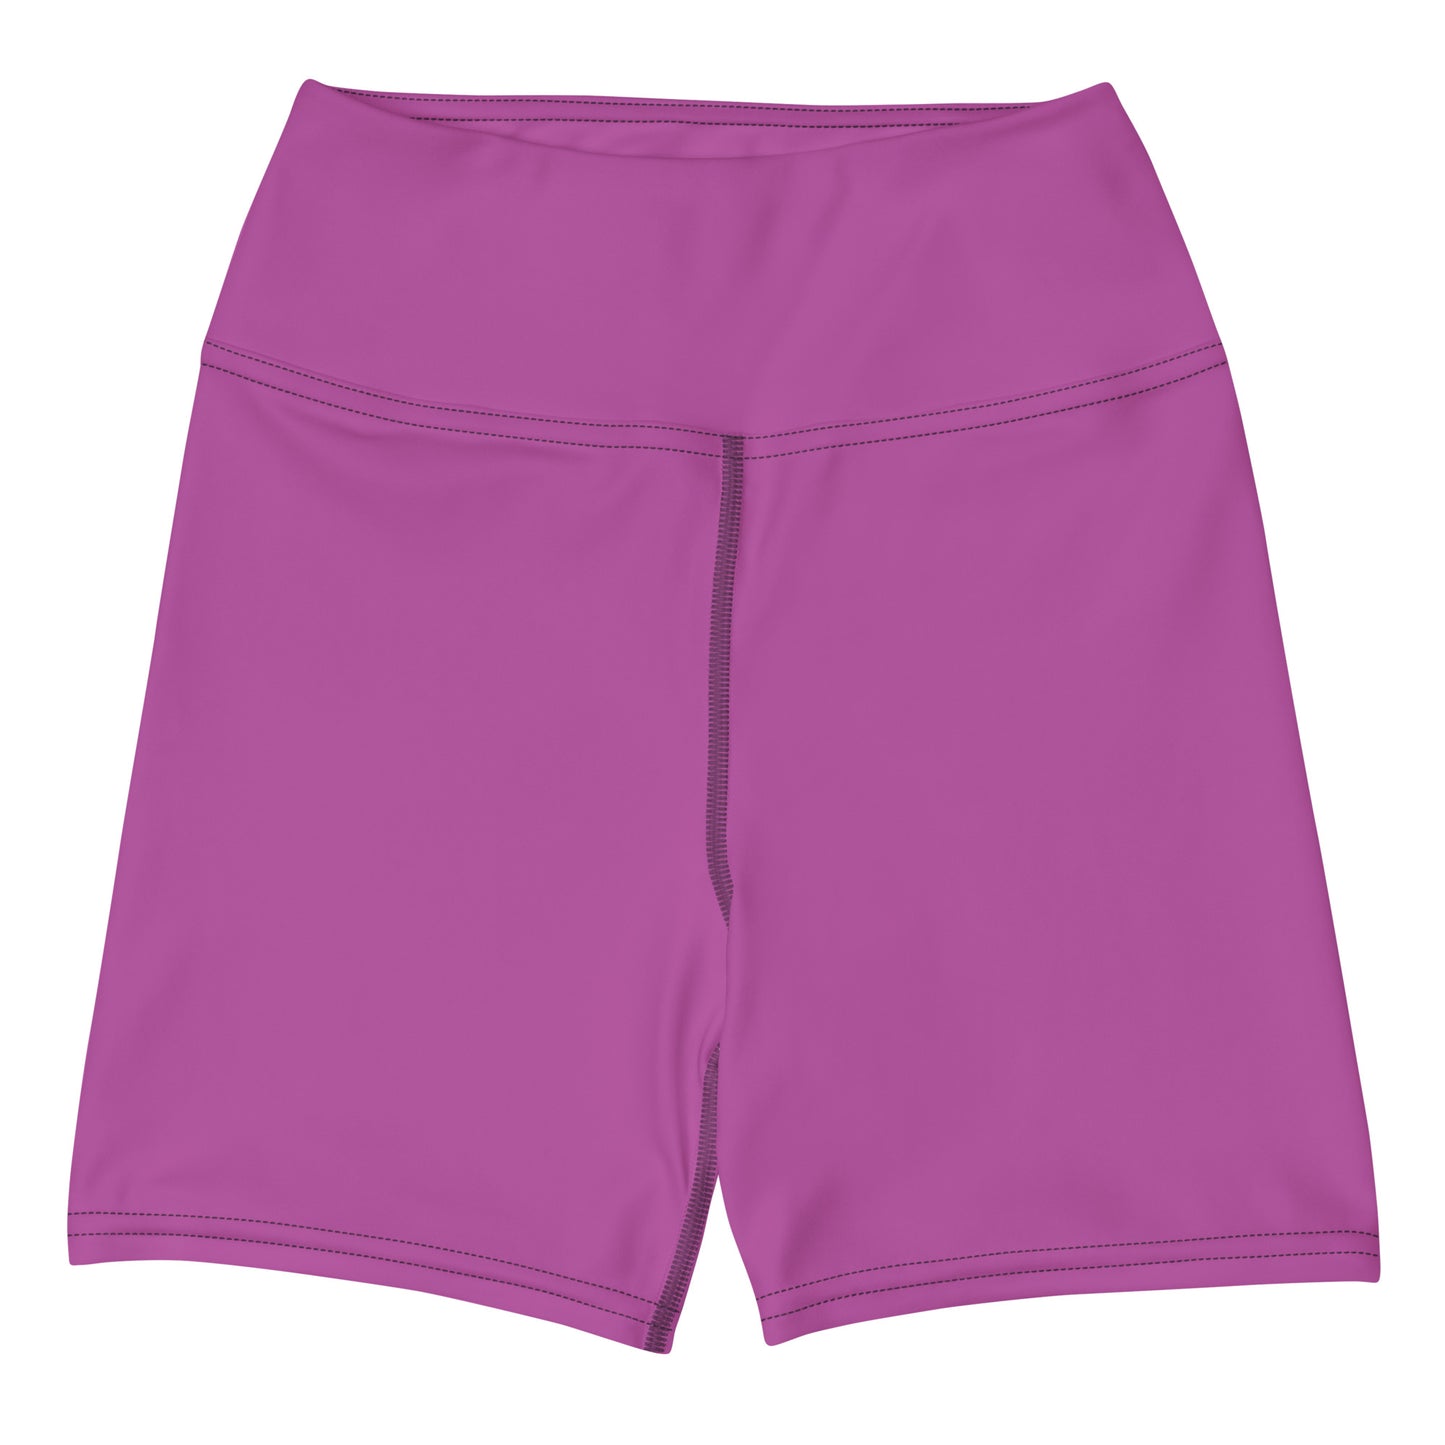 Pilze Solid Color High Waist Yoga Shorts / Bike Shorts with Inside Pocket